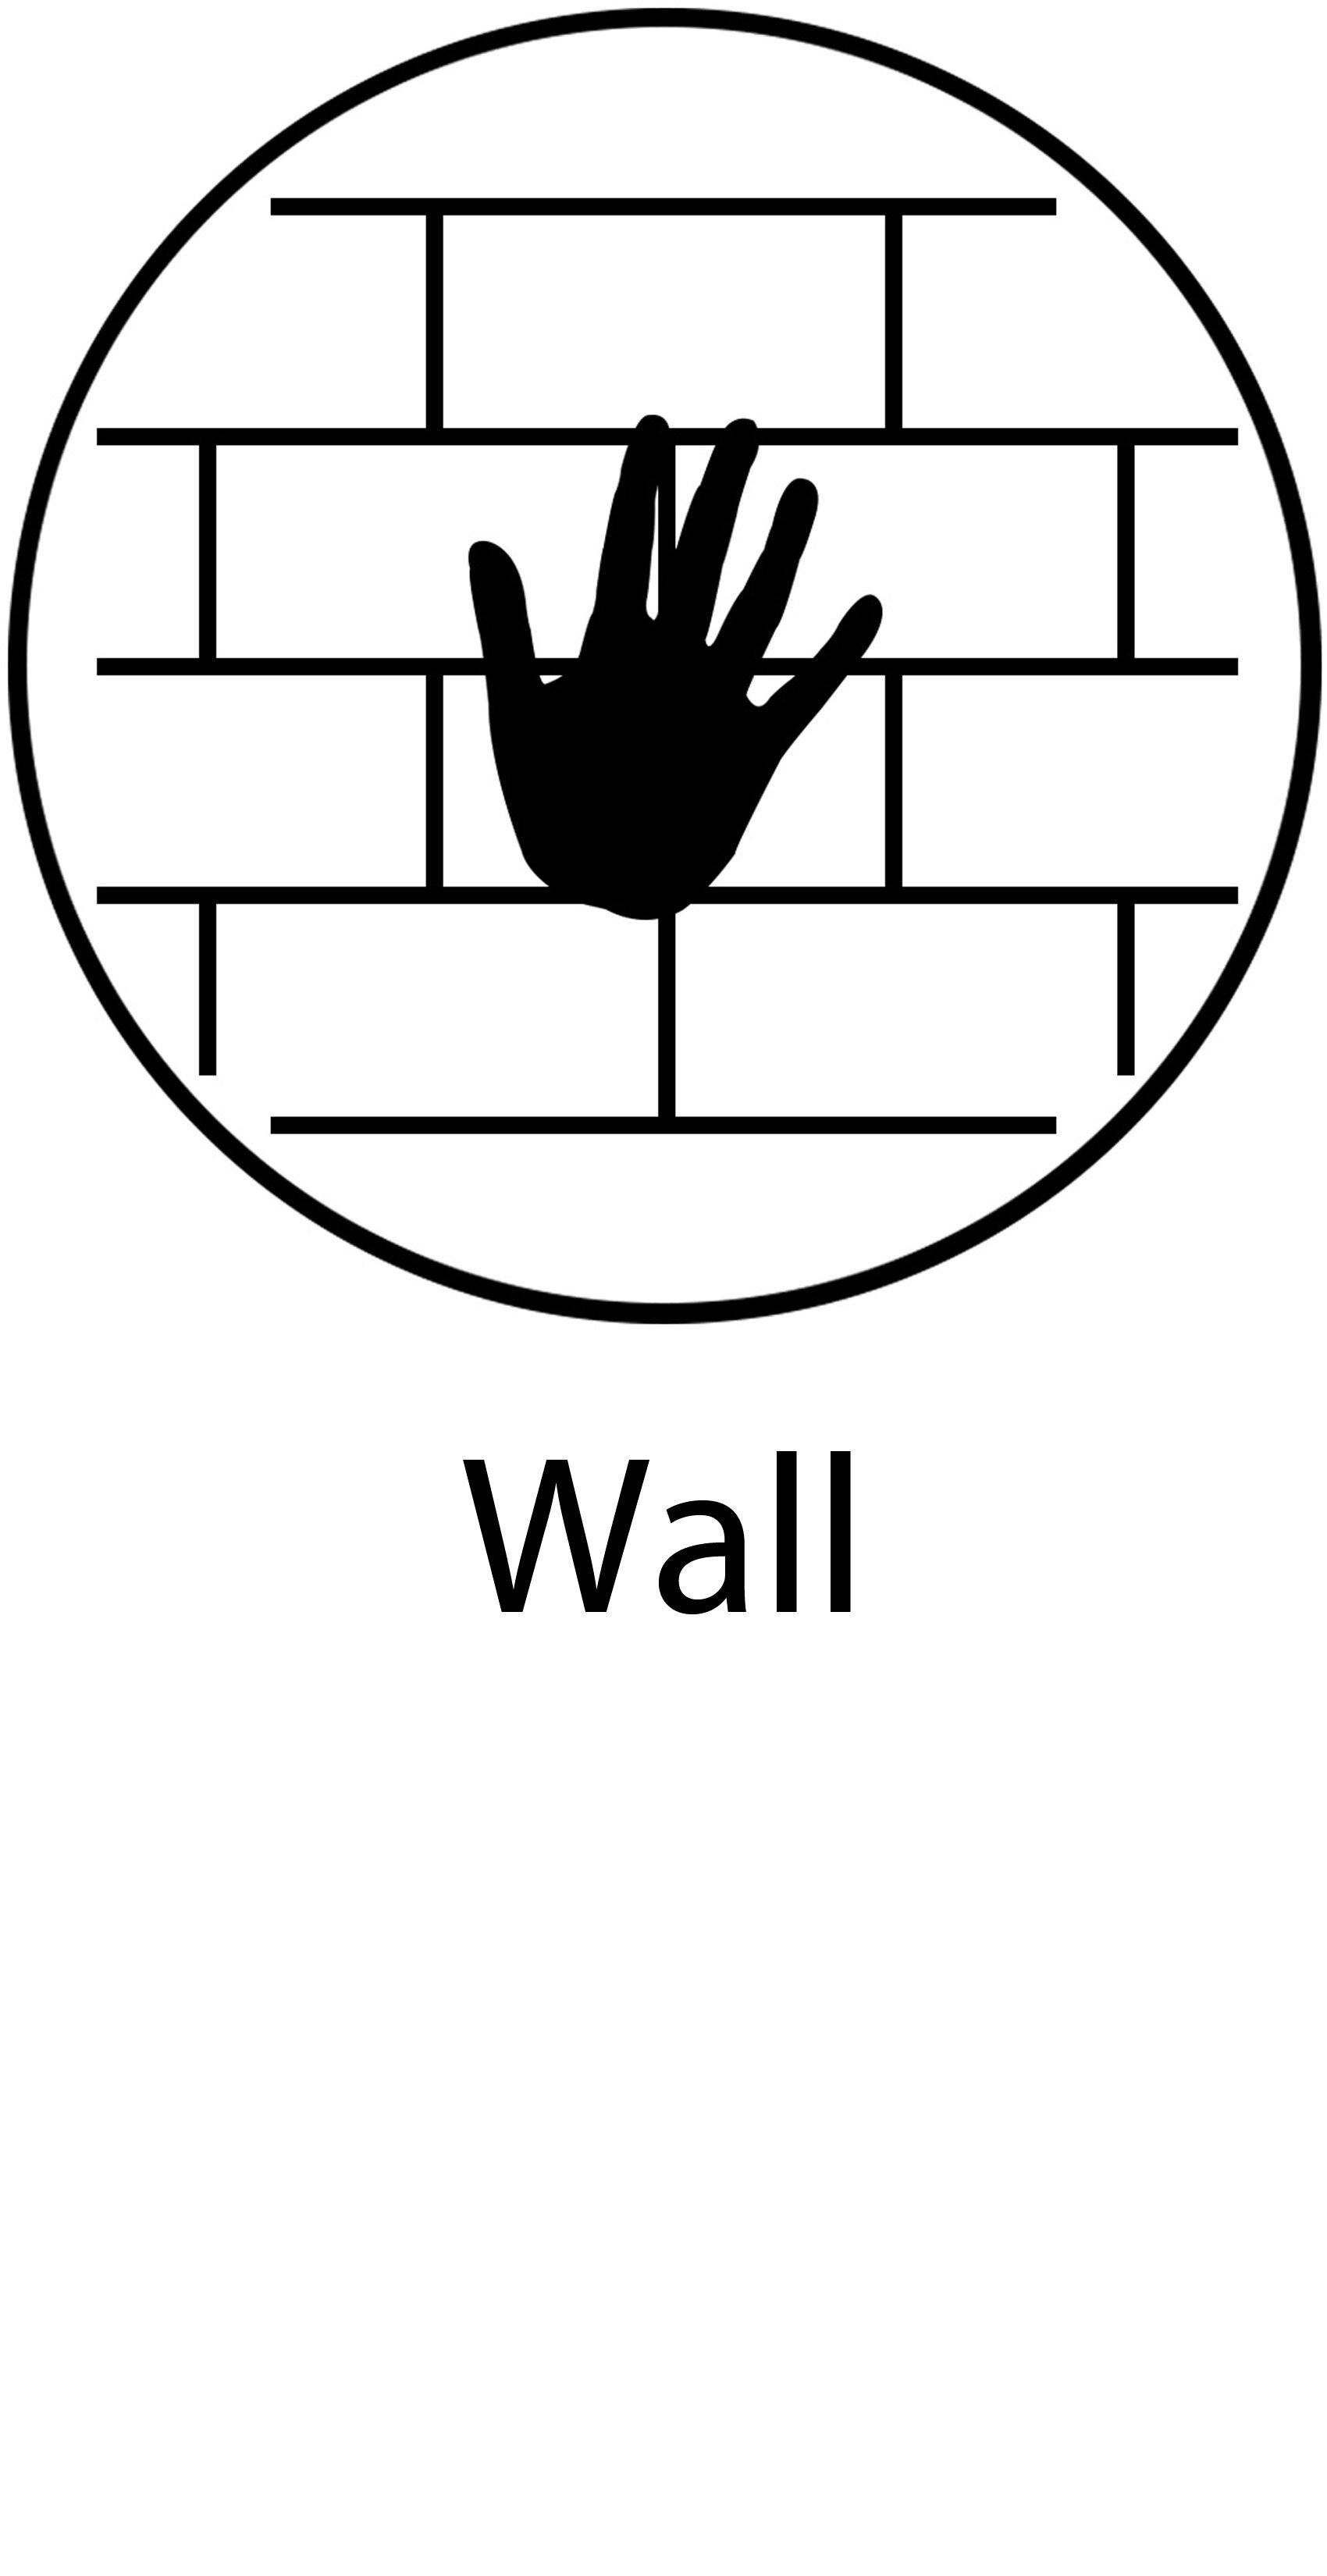 03 Wall.jpg